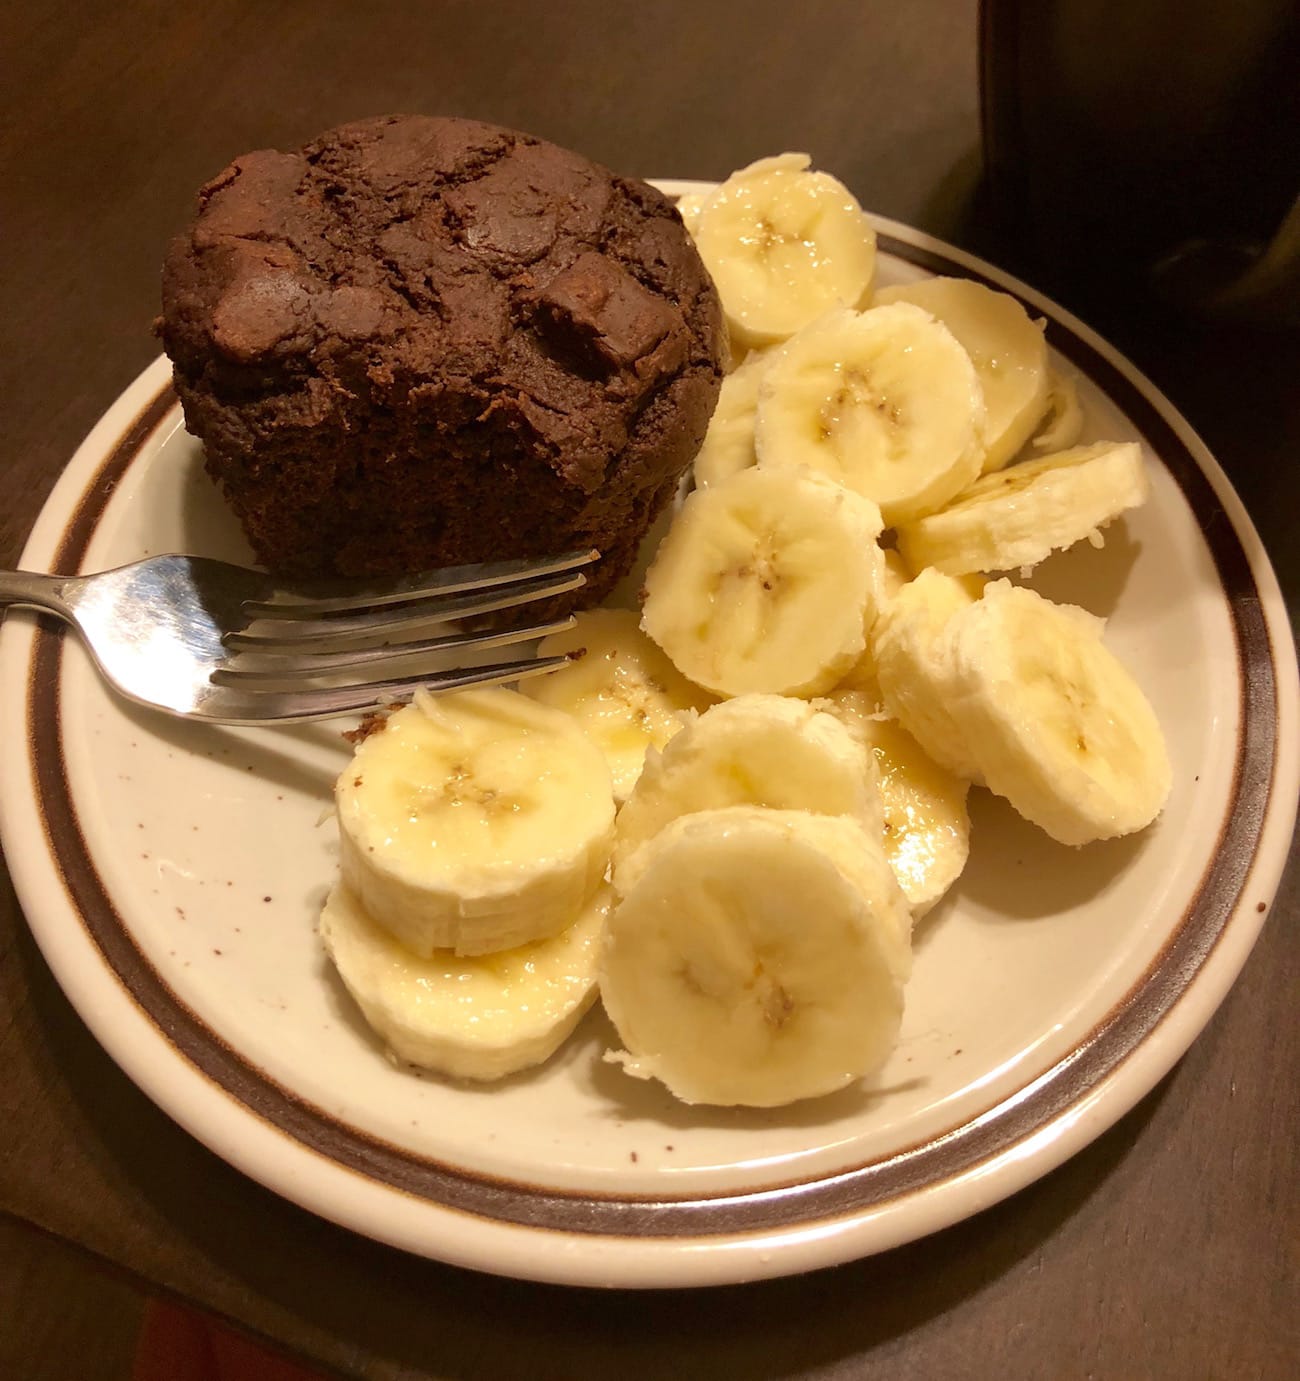 Chocolate Yogurt Muffin with a sliced banana